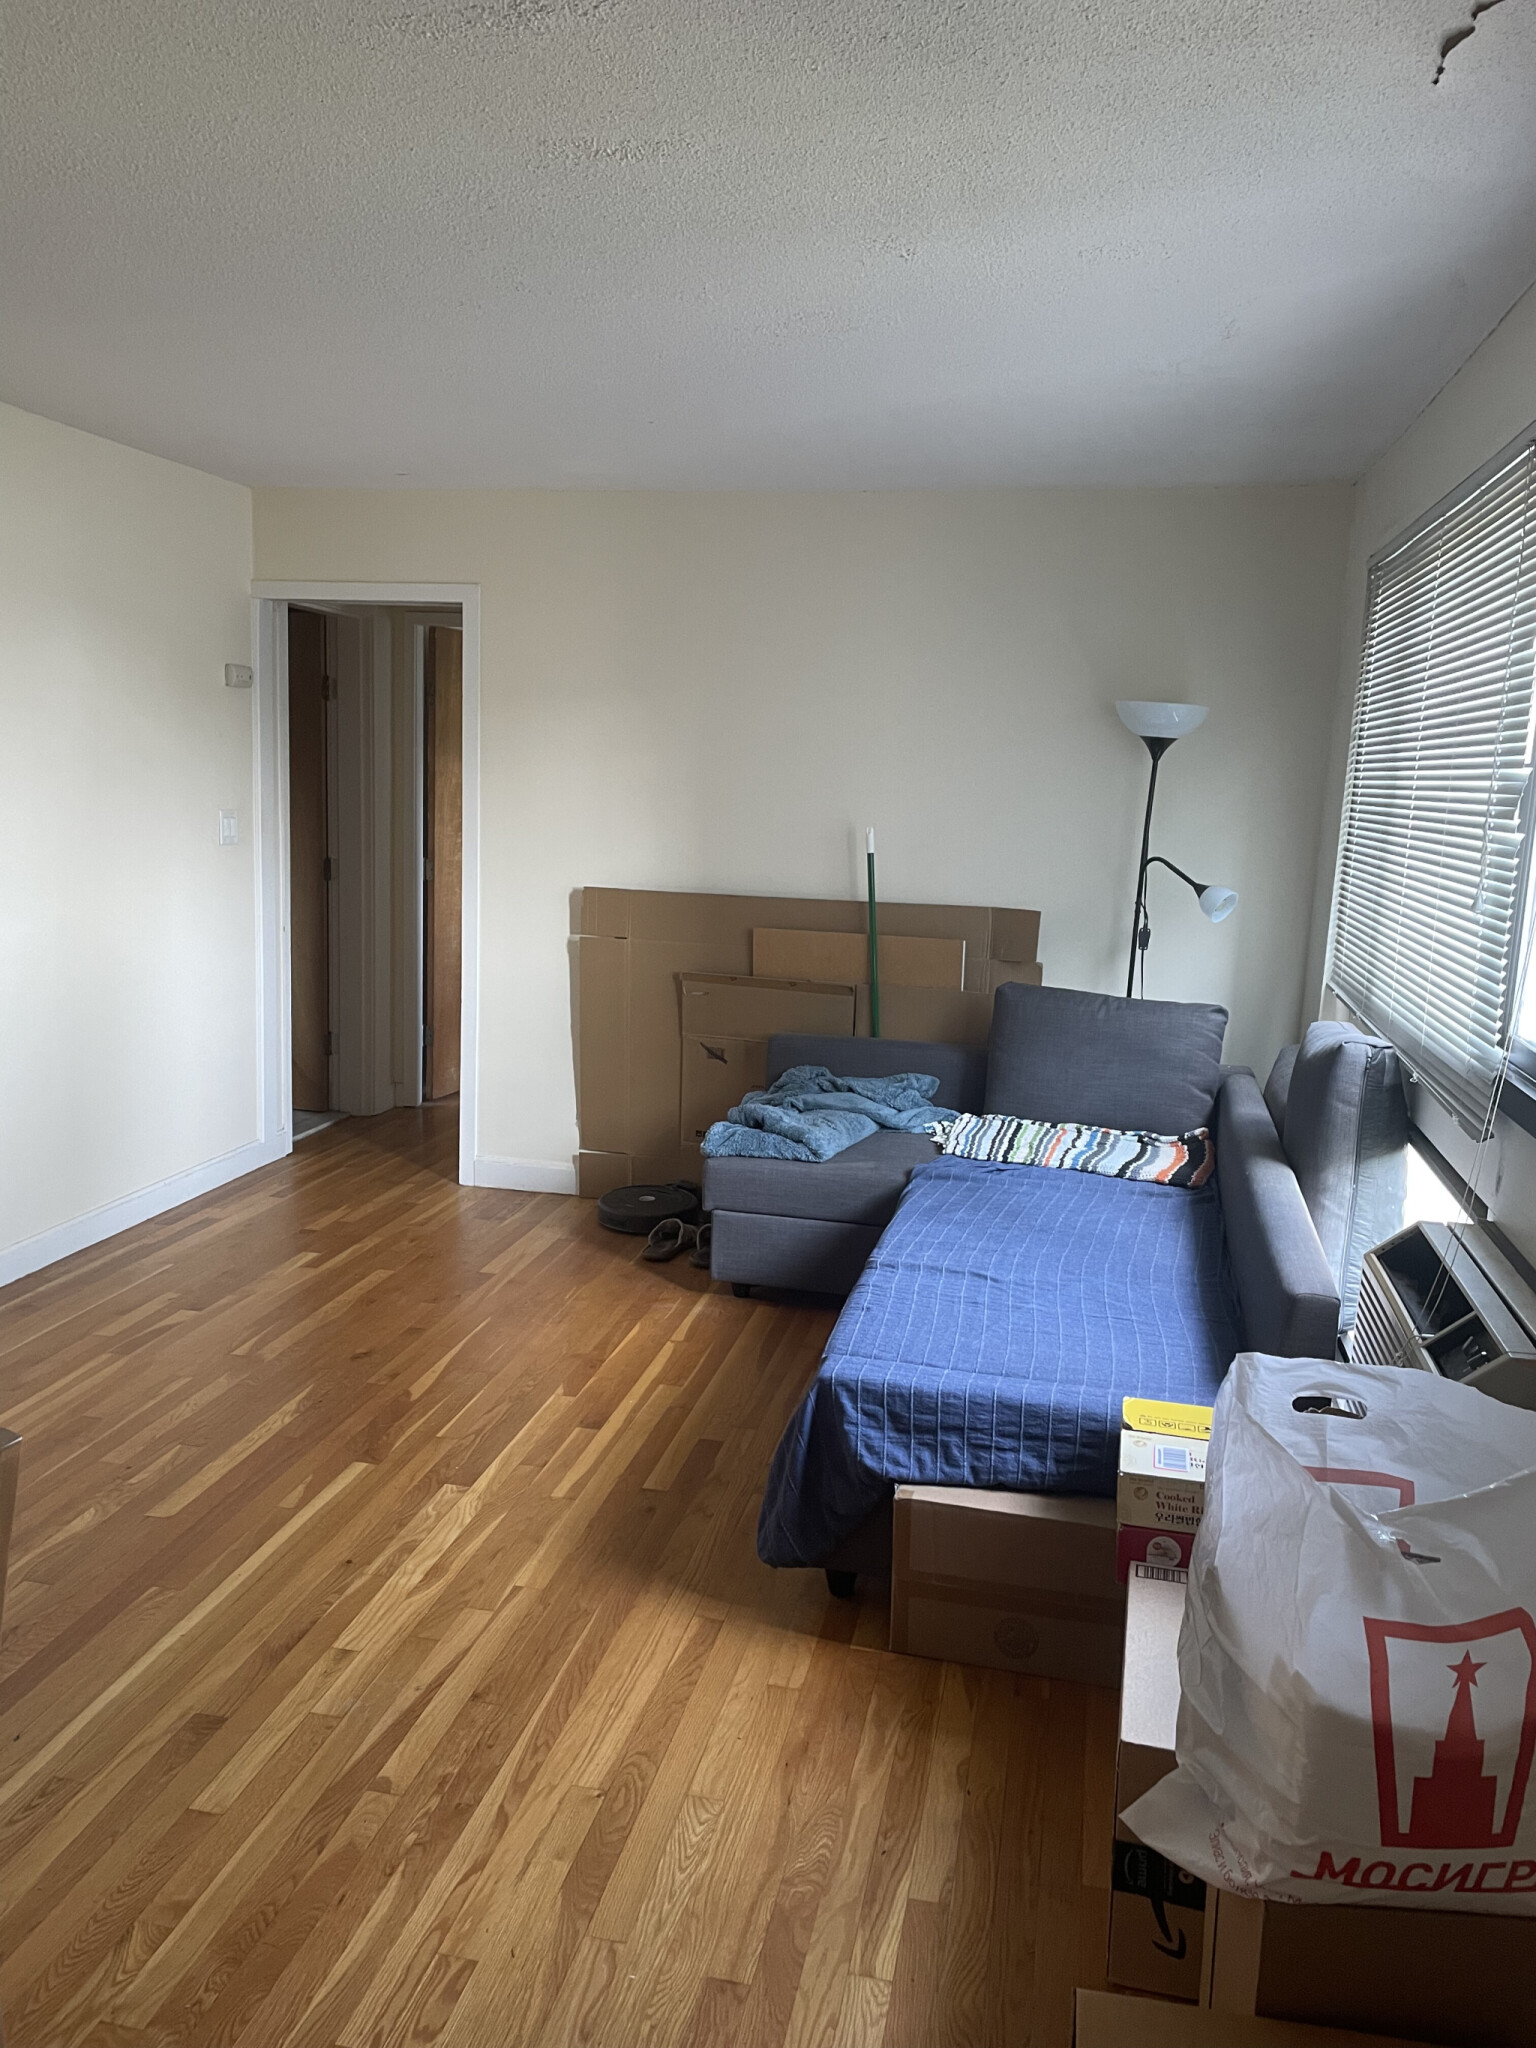 Photos of apartment on Wheeler St.,Cambridge MA 02138